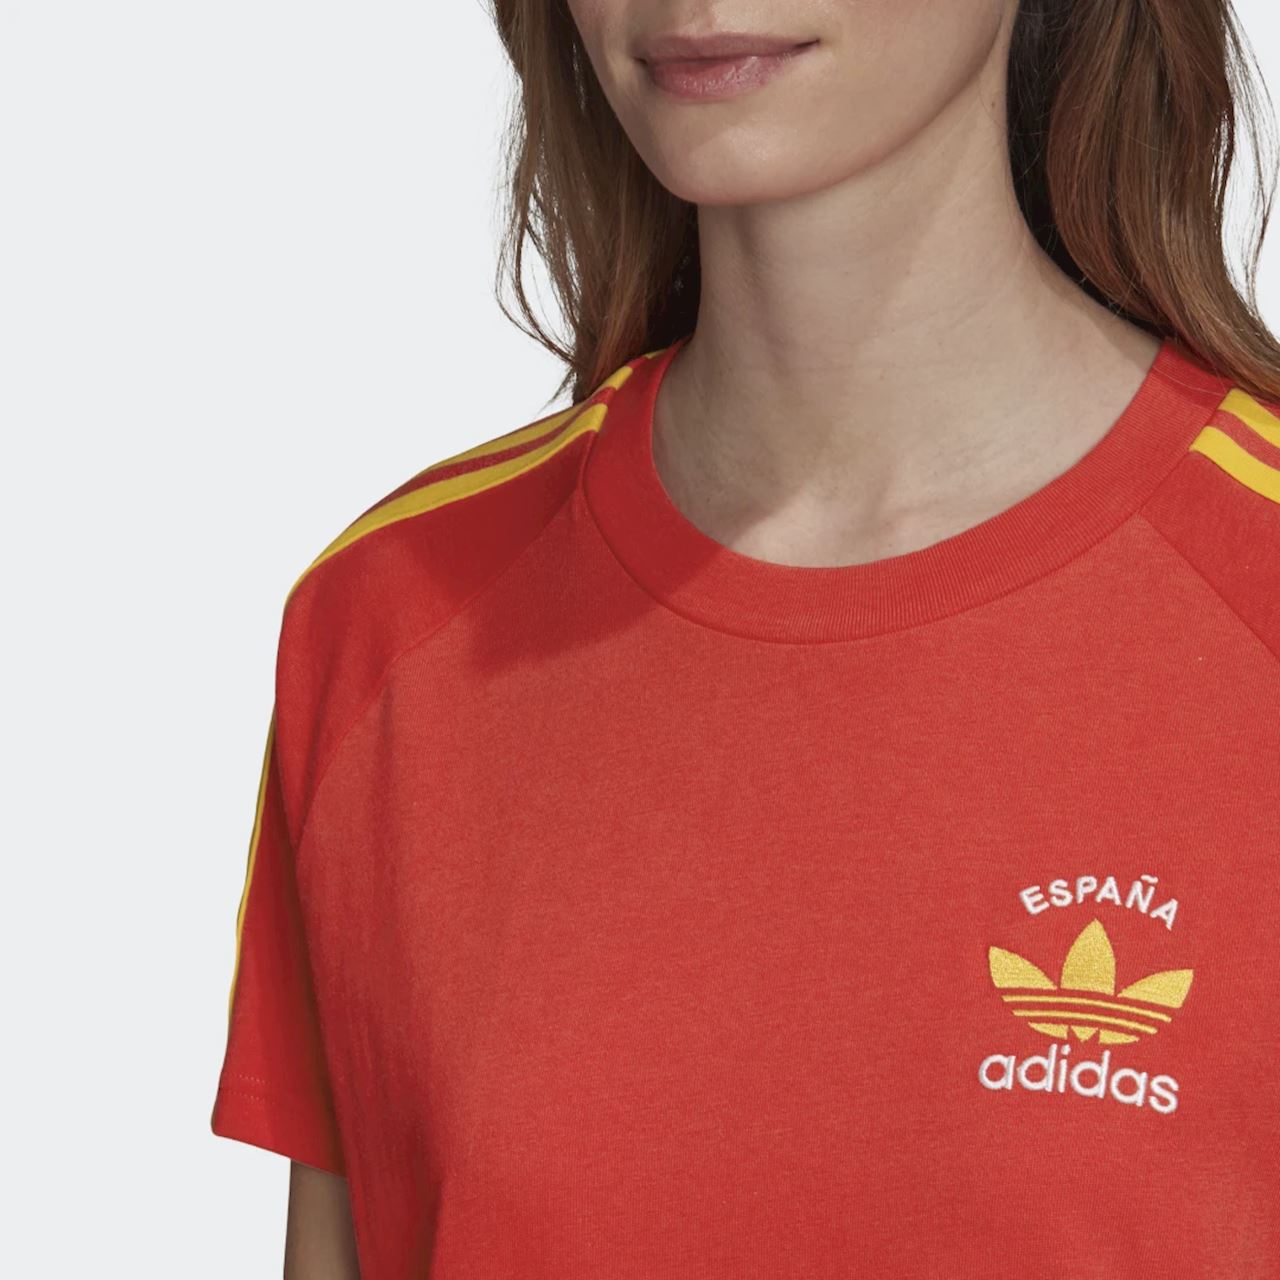 tradesports.co.uk Adidas Originals Women's Spain Tee Dress - Red